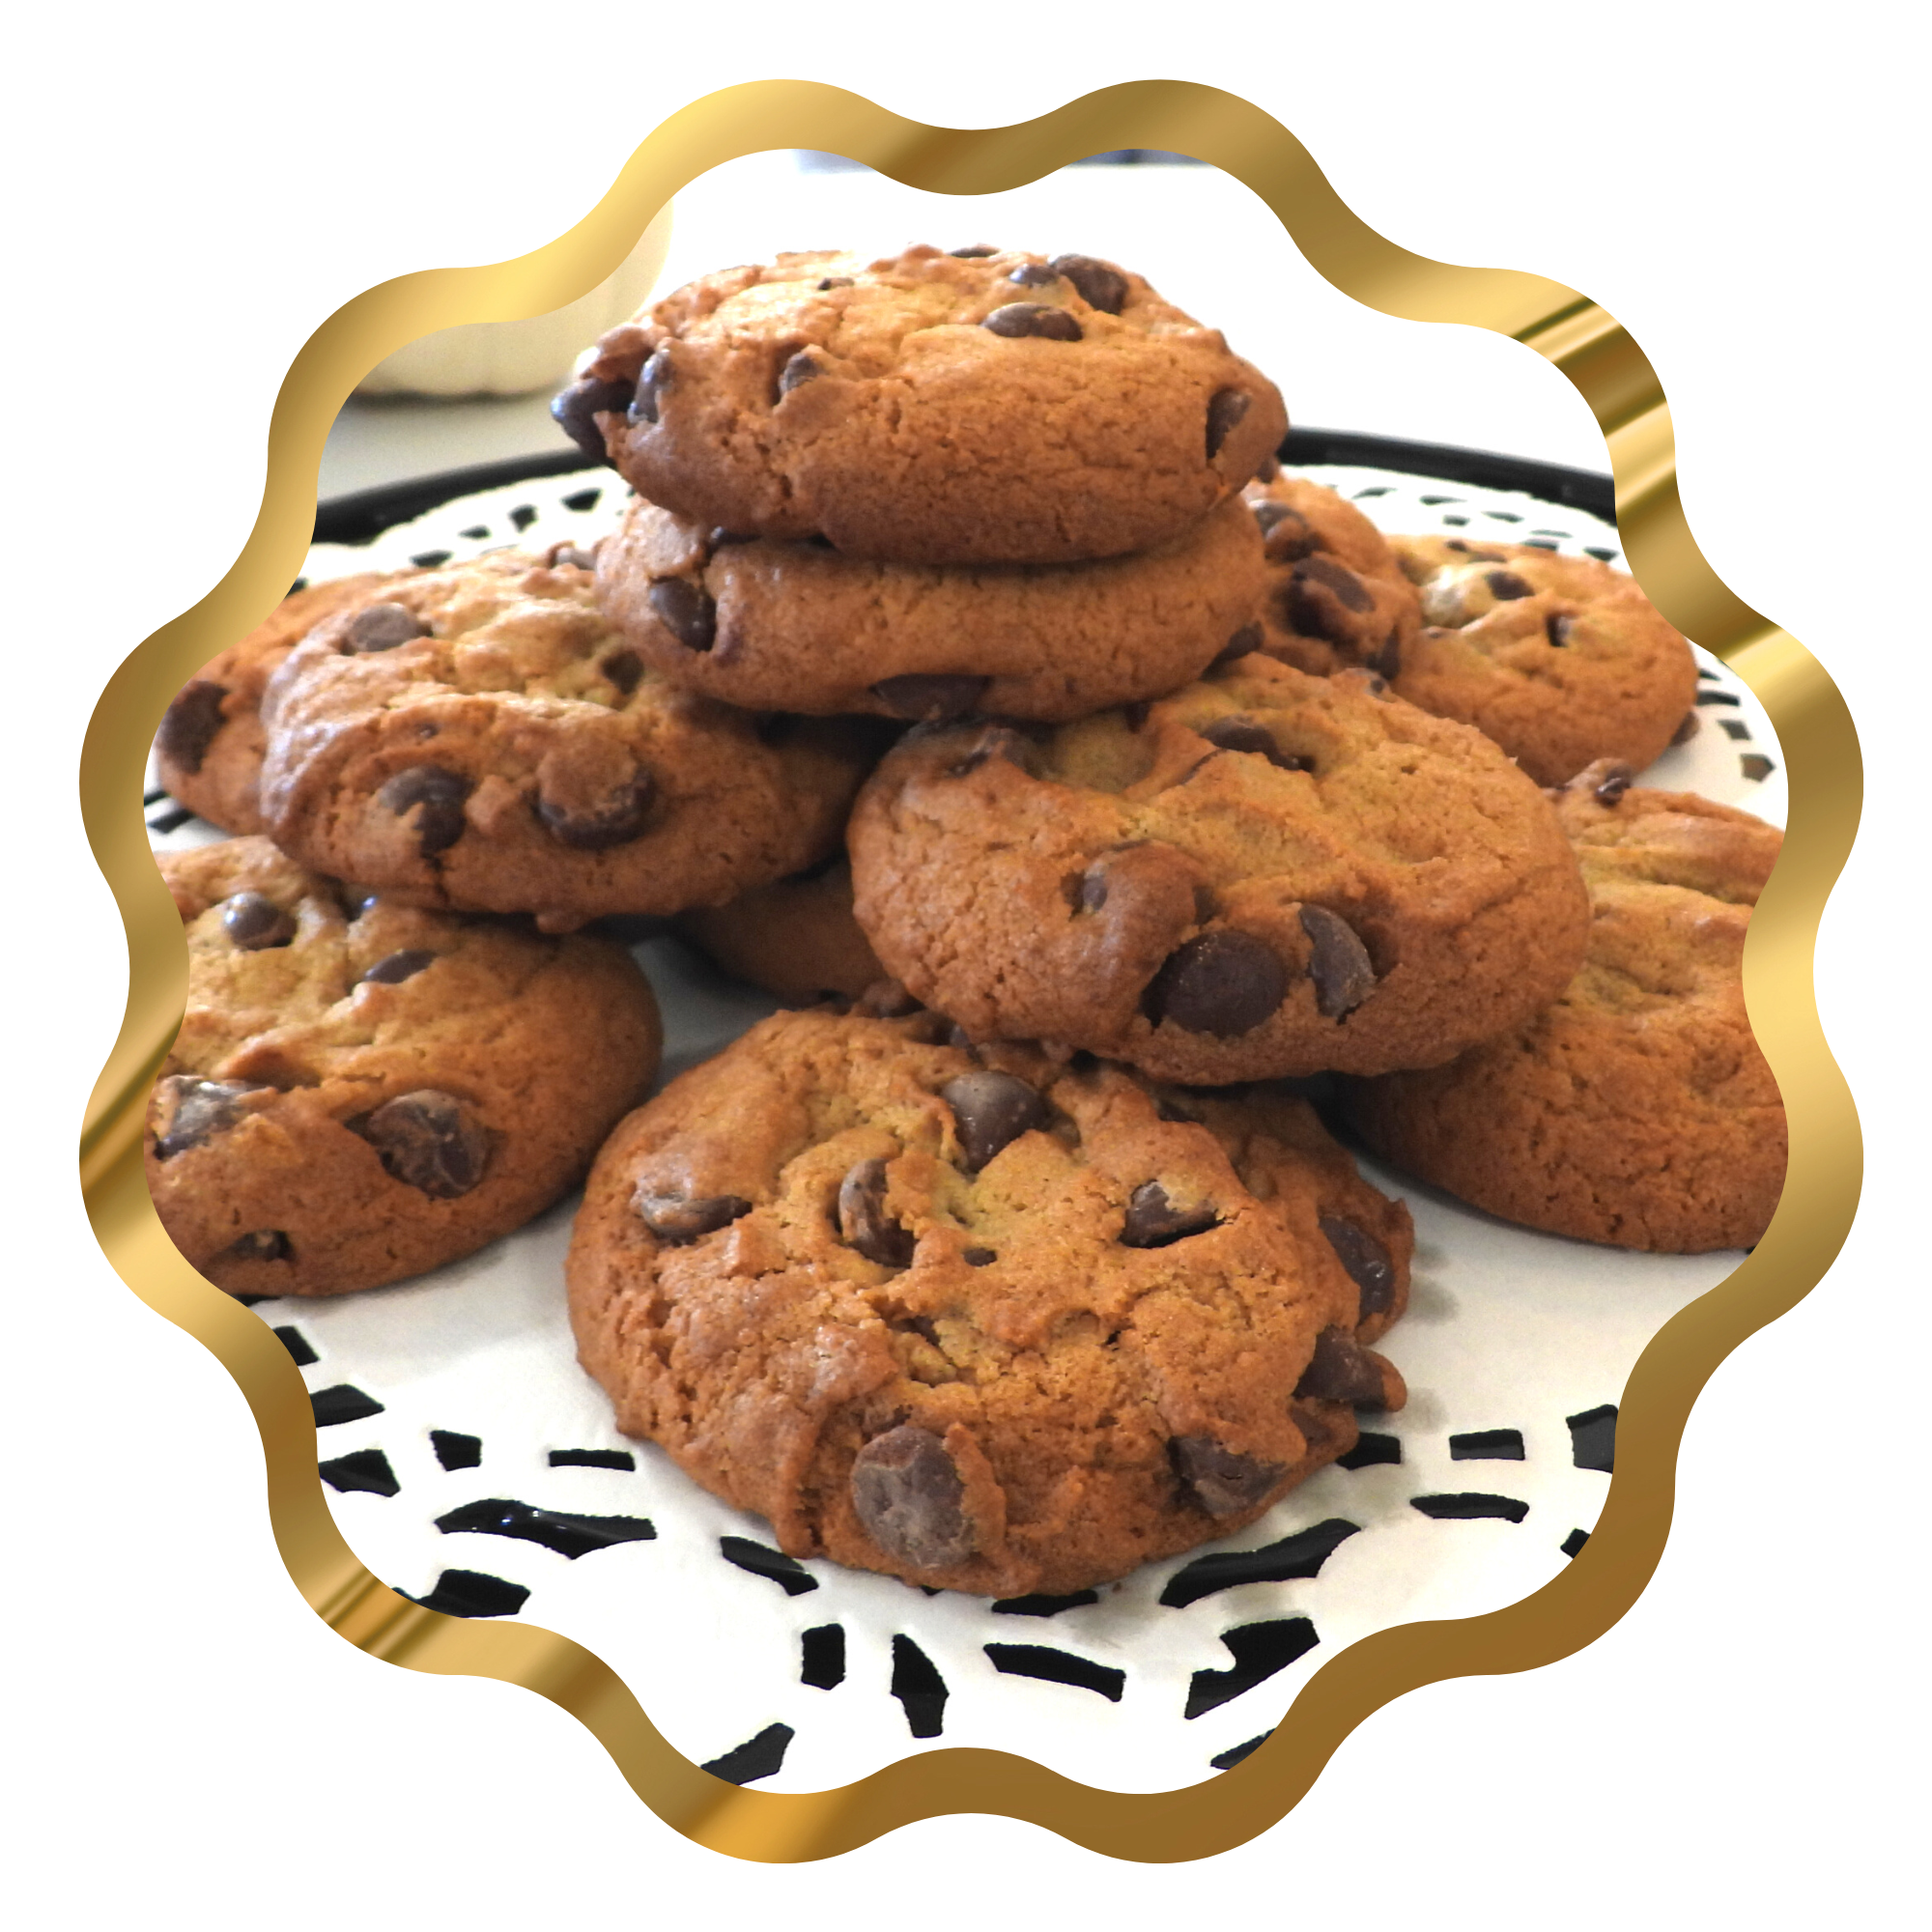 Bakery, local bakery, fresh baked, homemade, cookies, cakes, pies, scones, muffins, treats, sweets, local bake shop, bake shop, café, local café, Asheboro, Greensboro, triad, bakery cookies, bulk cookies, order cookies online, fresh baked cookies, homemade cookies, cookie orders, chocolate chip cookies